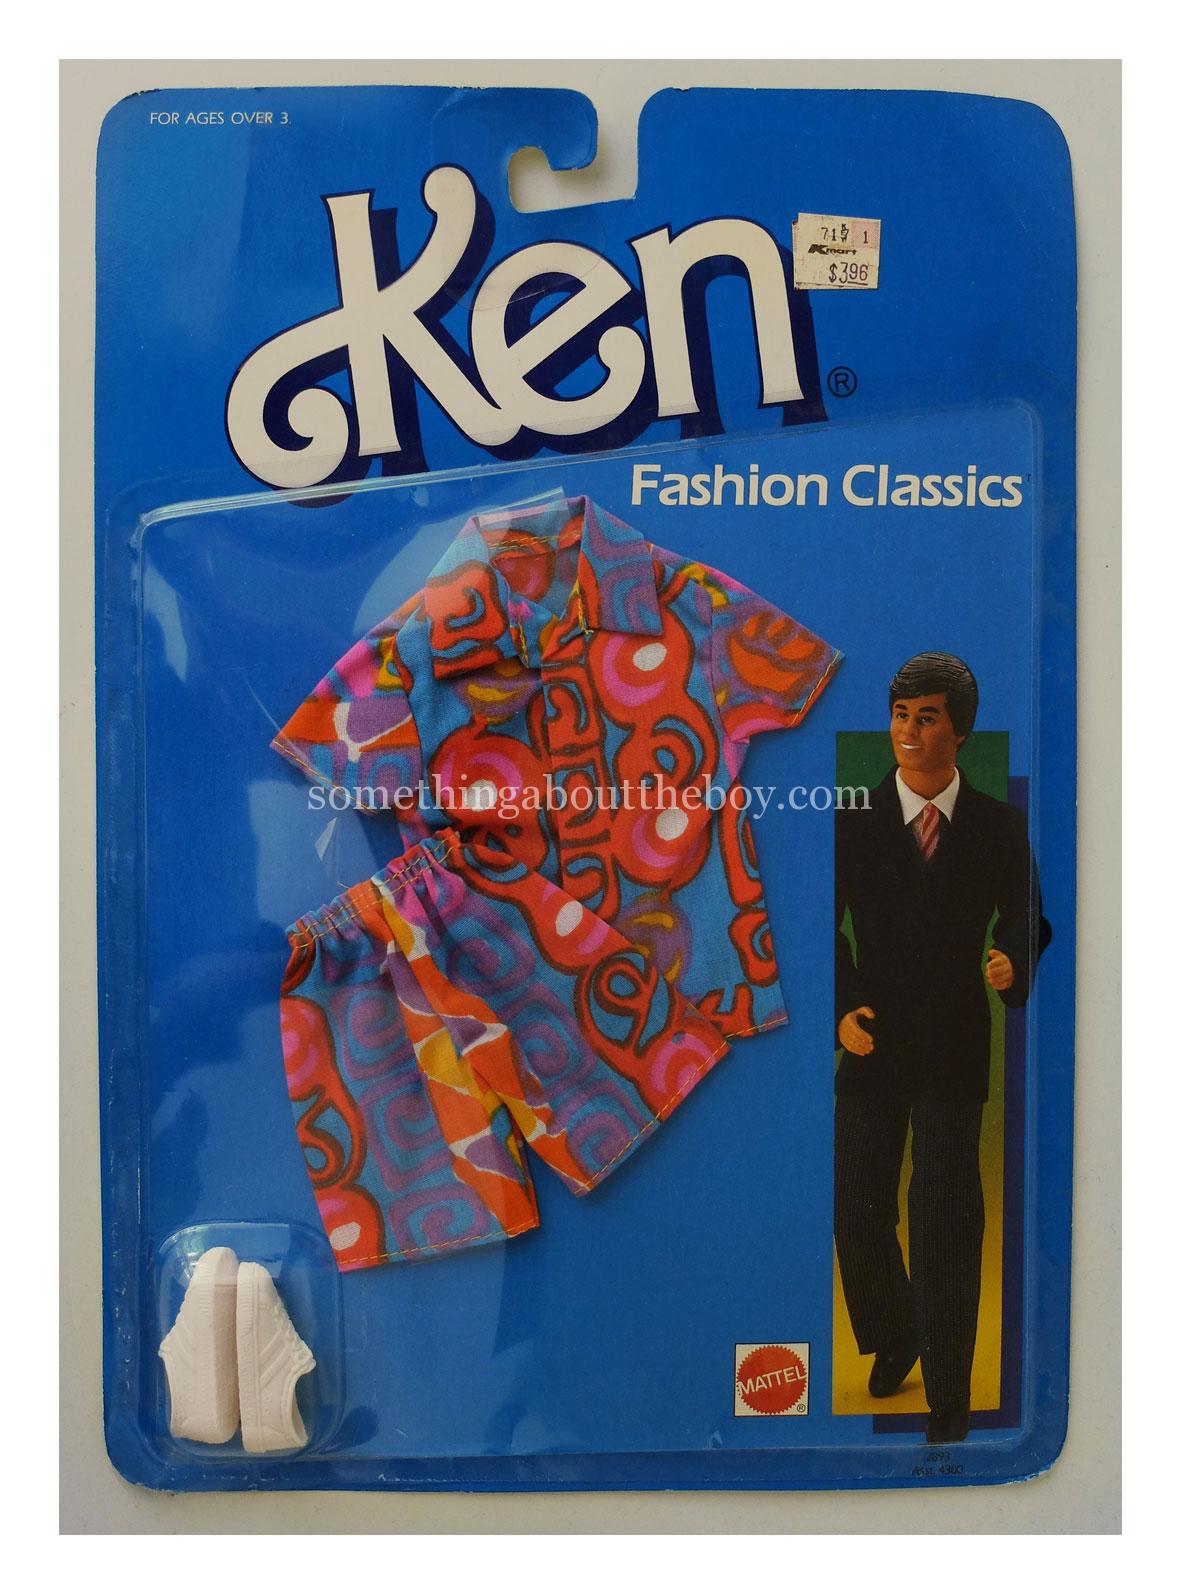 1986-87 Kmart Fashion Classics #2892 in original packaging